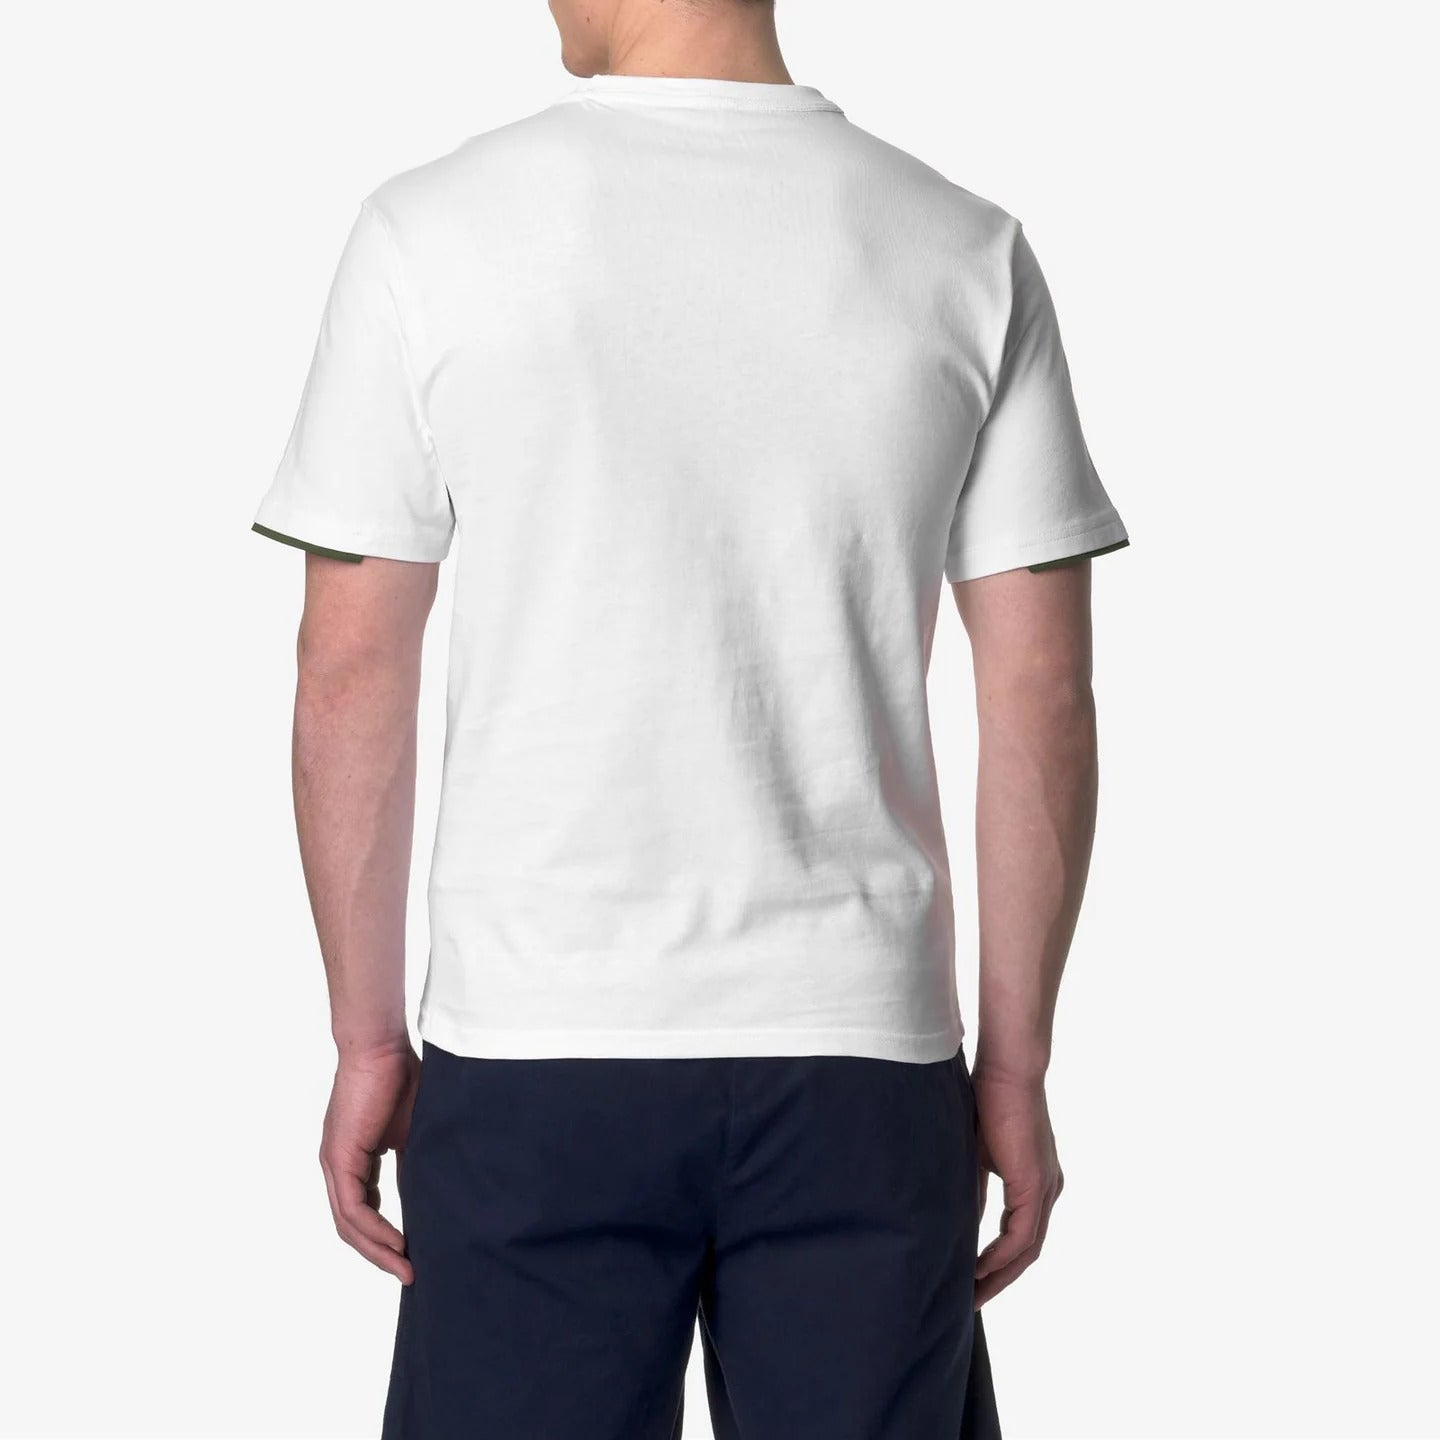 K-WAY T-Shirt Uomo FANTOME CONTRAST POCKETS-White